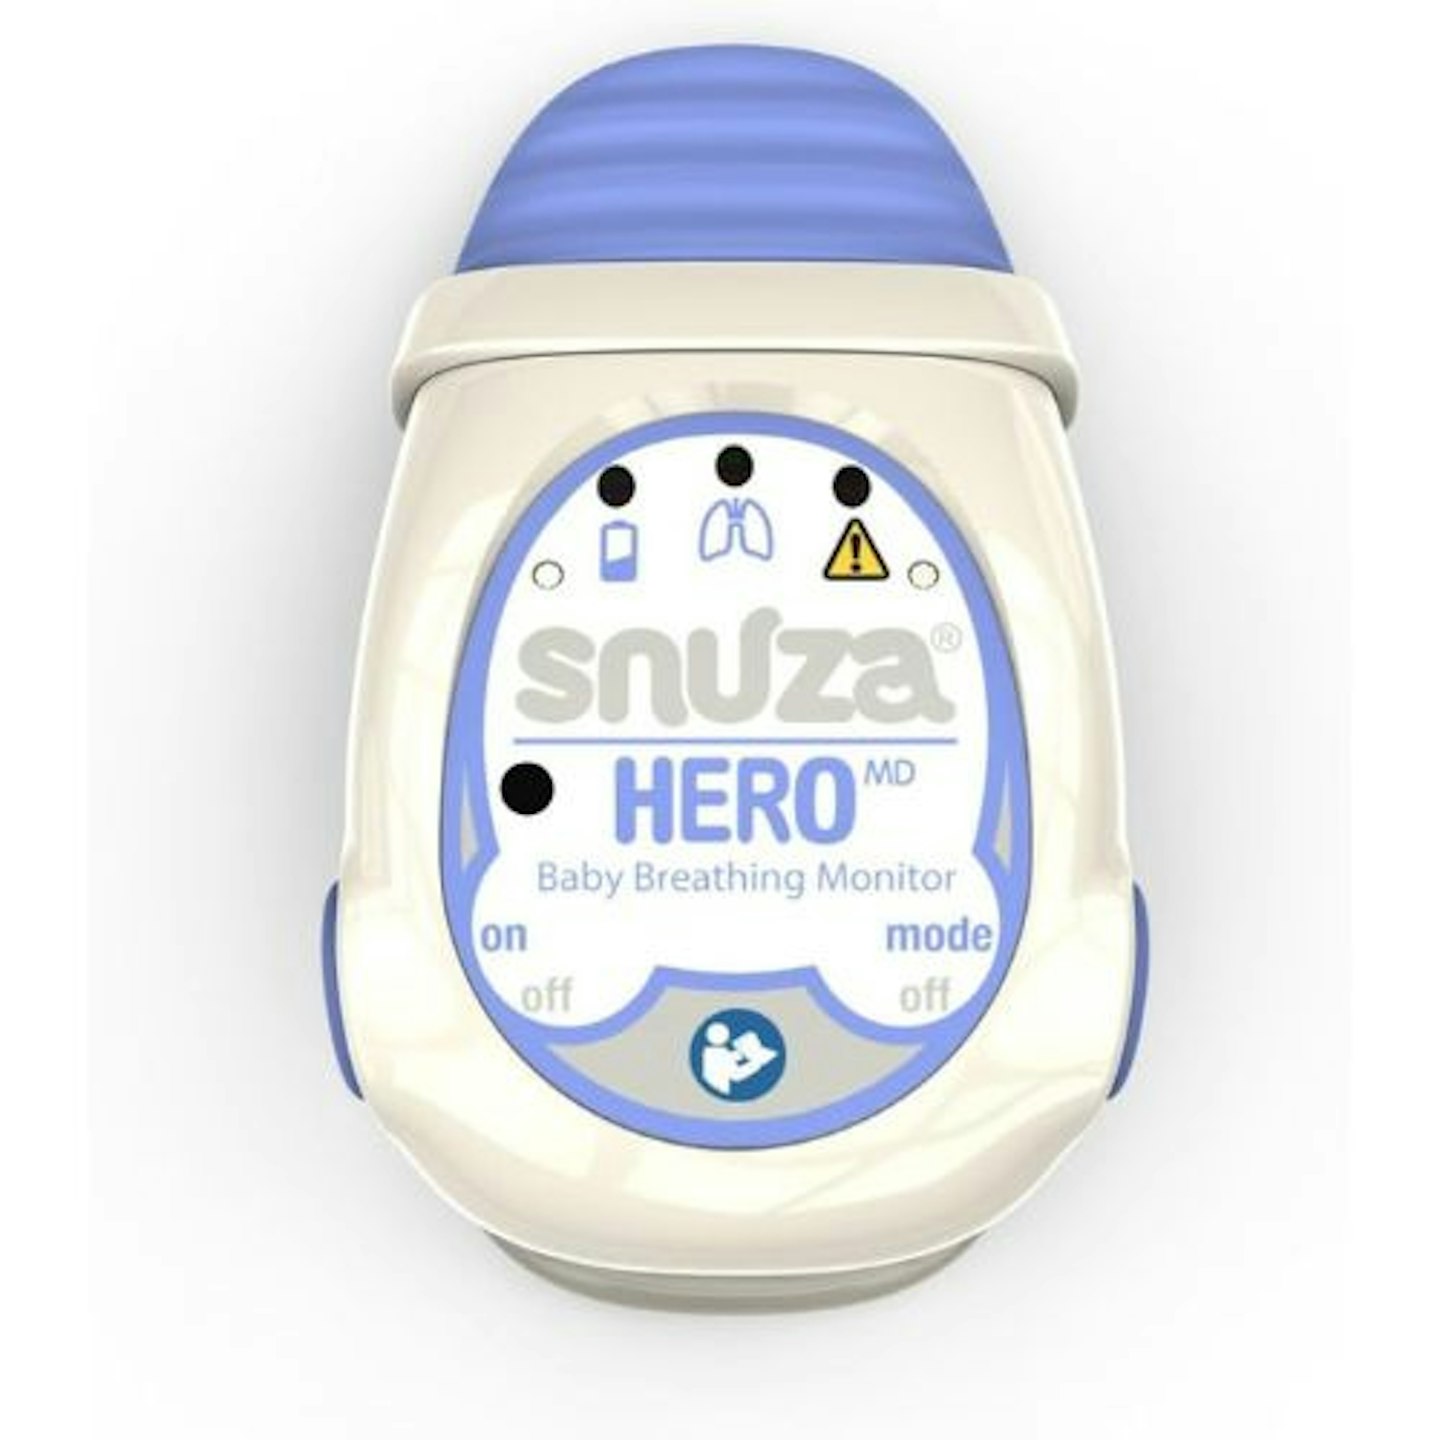 Best baby breathing monitor Snuza Hero MD Portable Baby Breathing Monitor